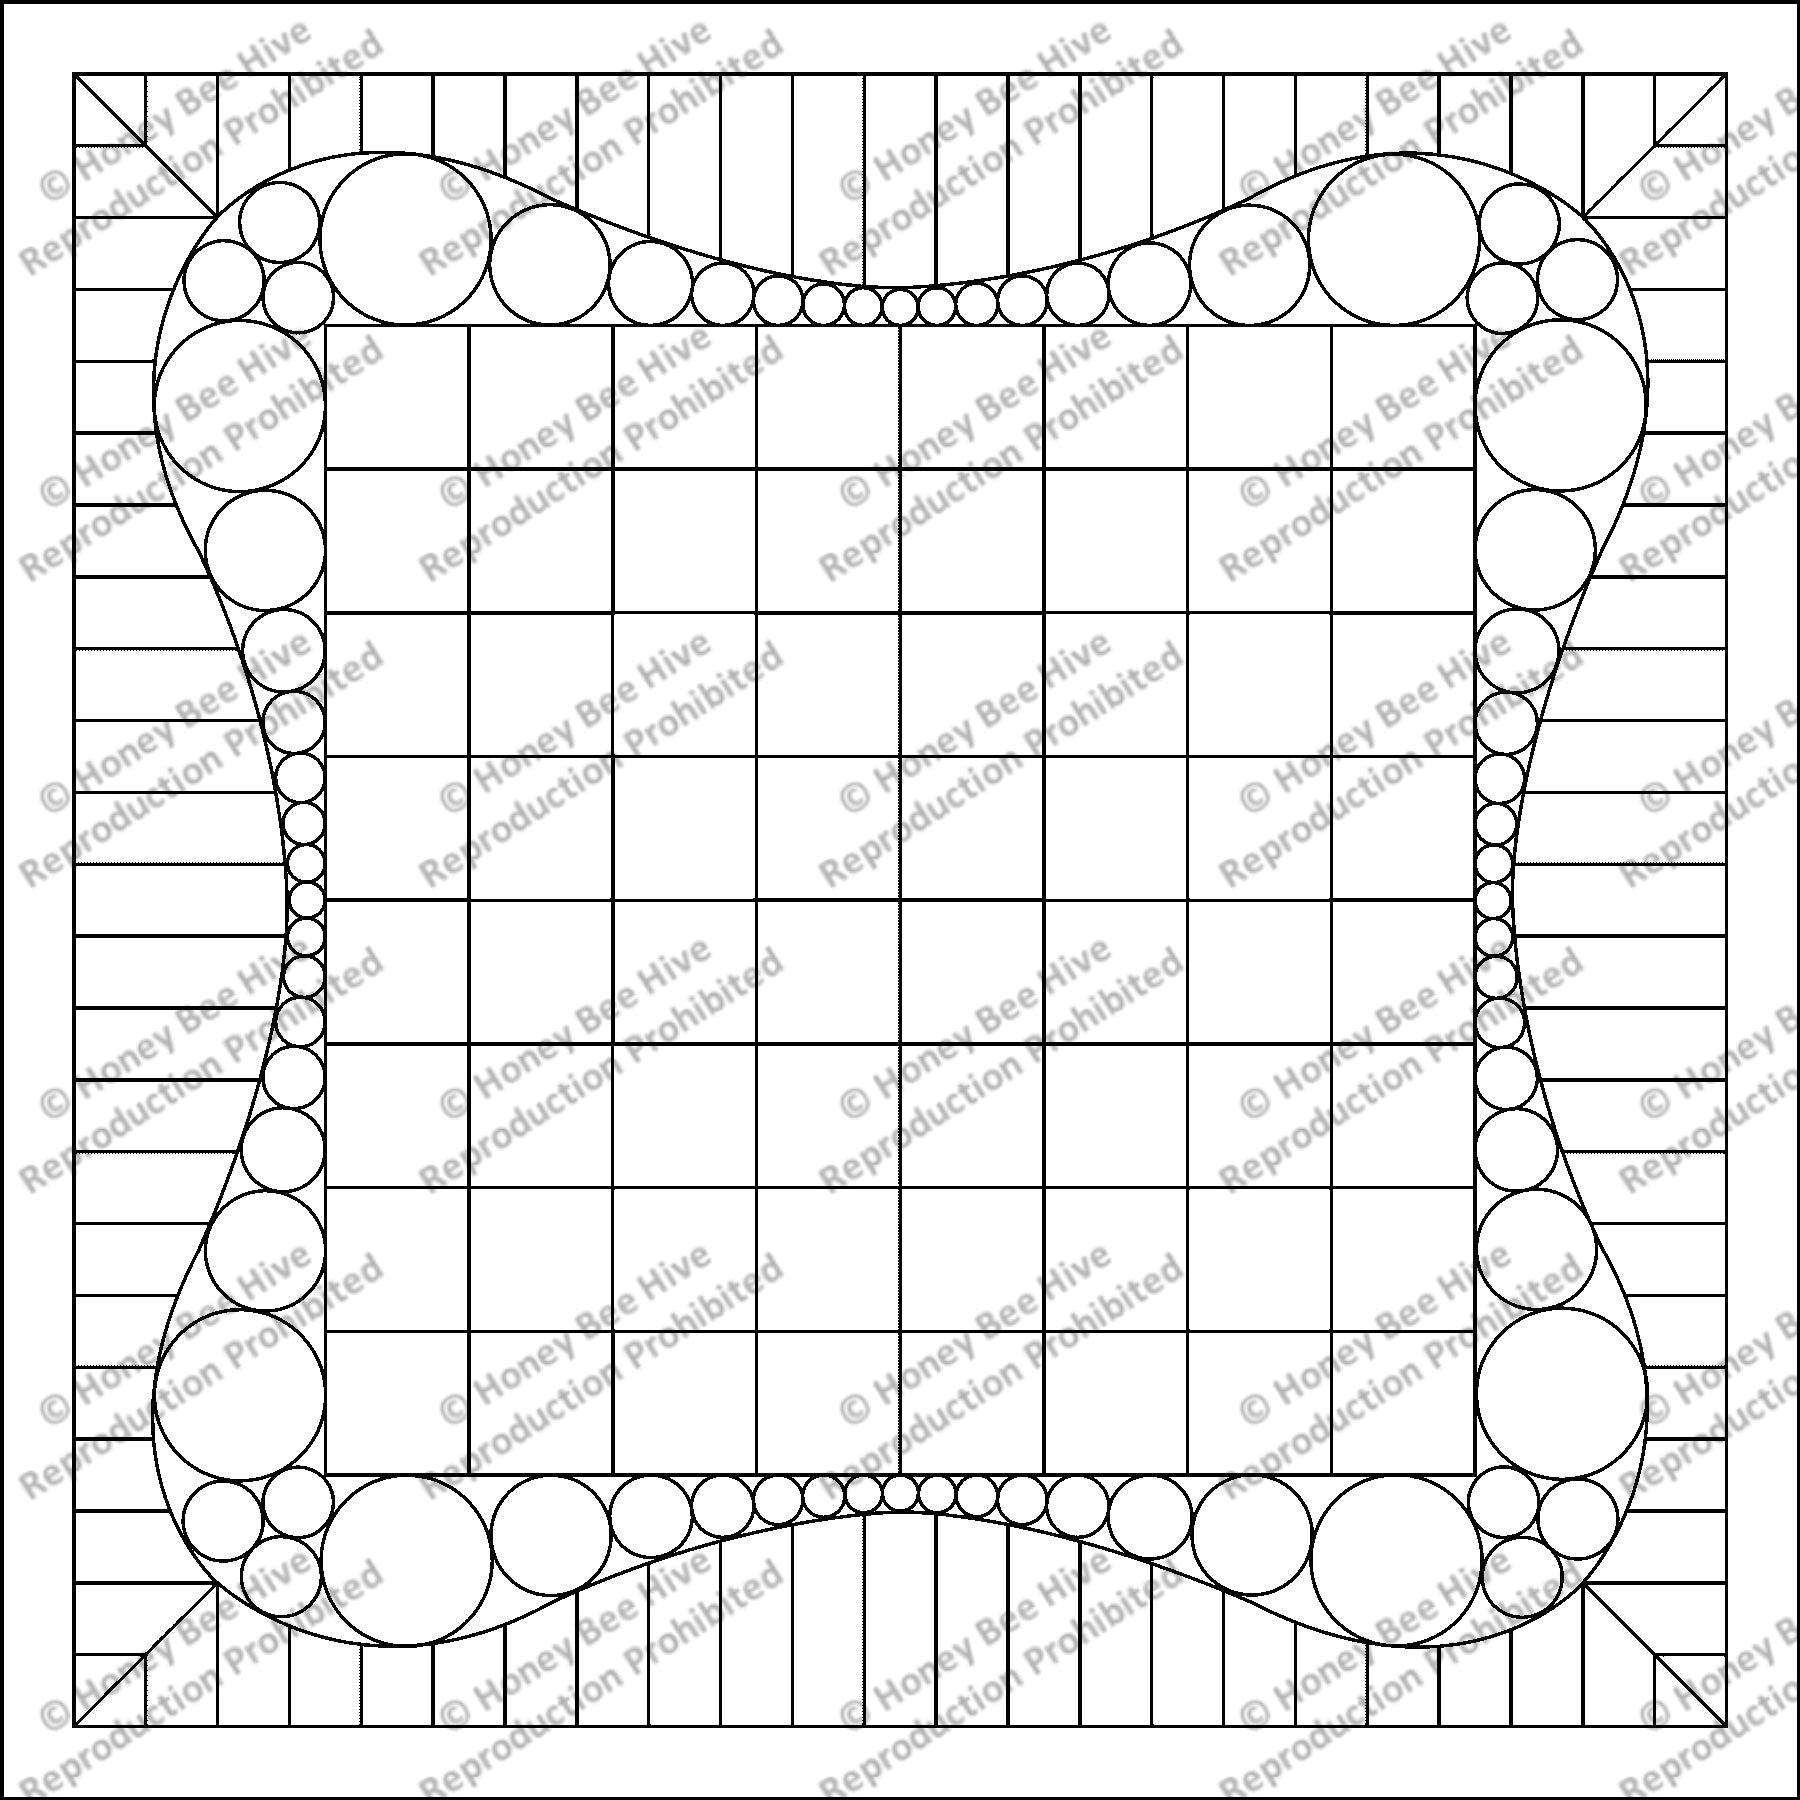 Geometric Stashbuster, rug hooking pattern